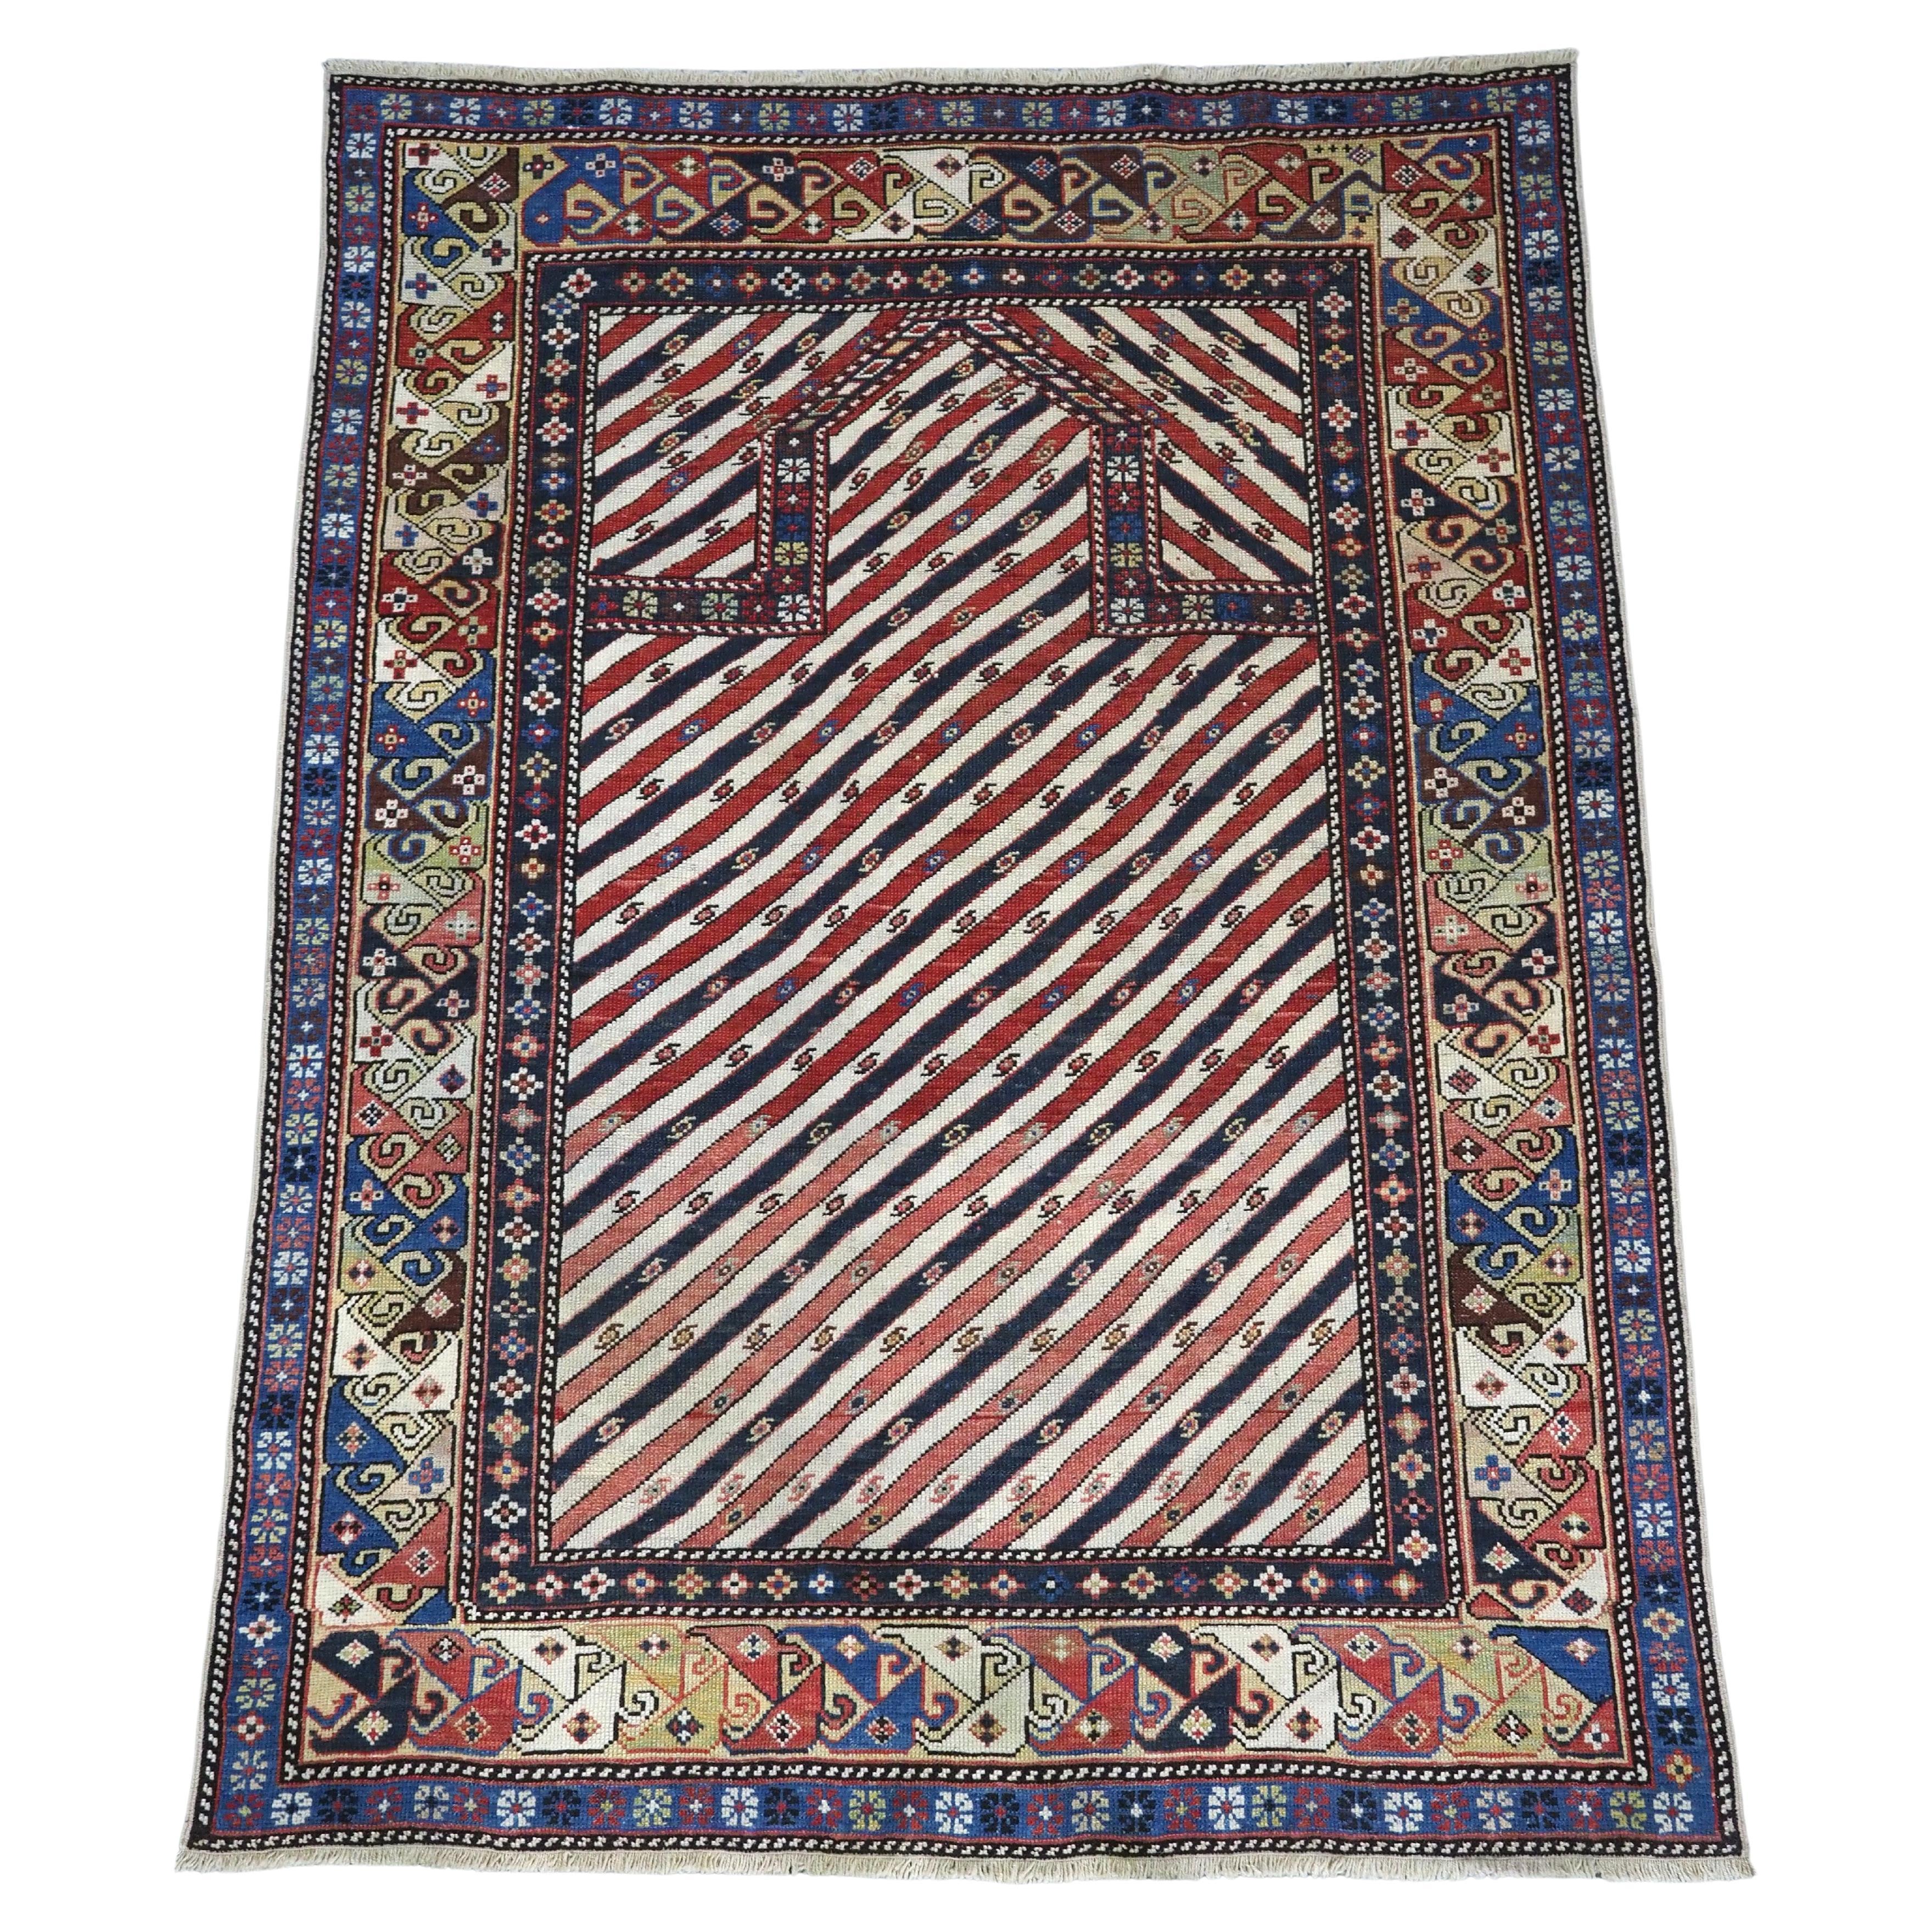 Antique Caucasian Shirvan/Dagestan prayer rug with scarce diagonal stipe design. For Sale